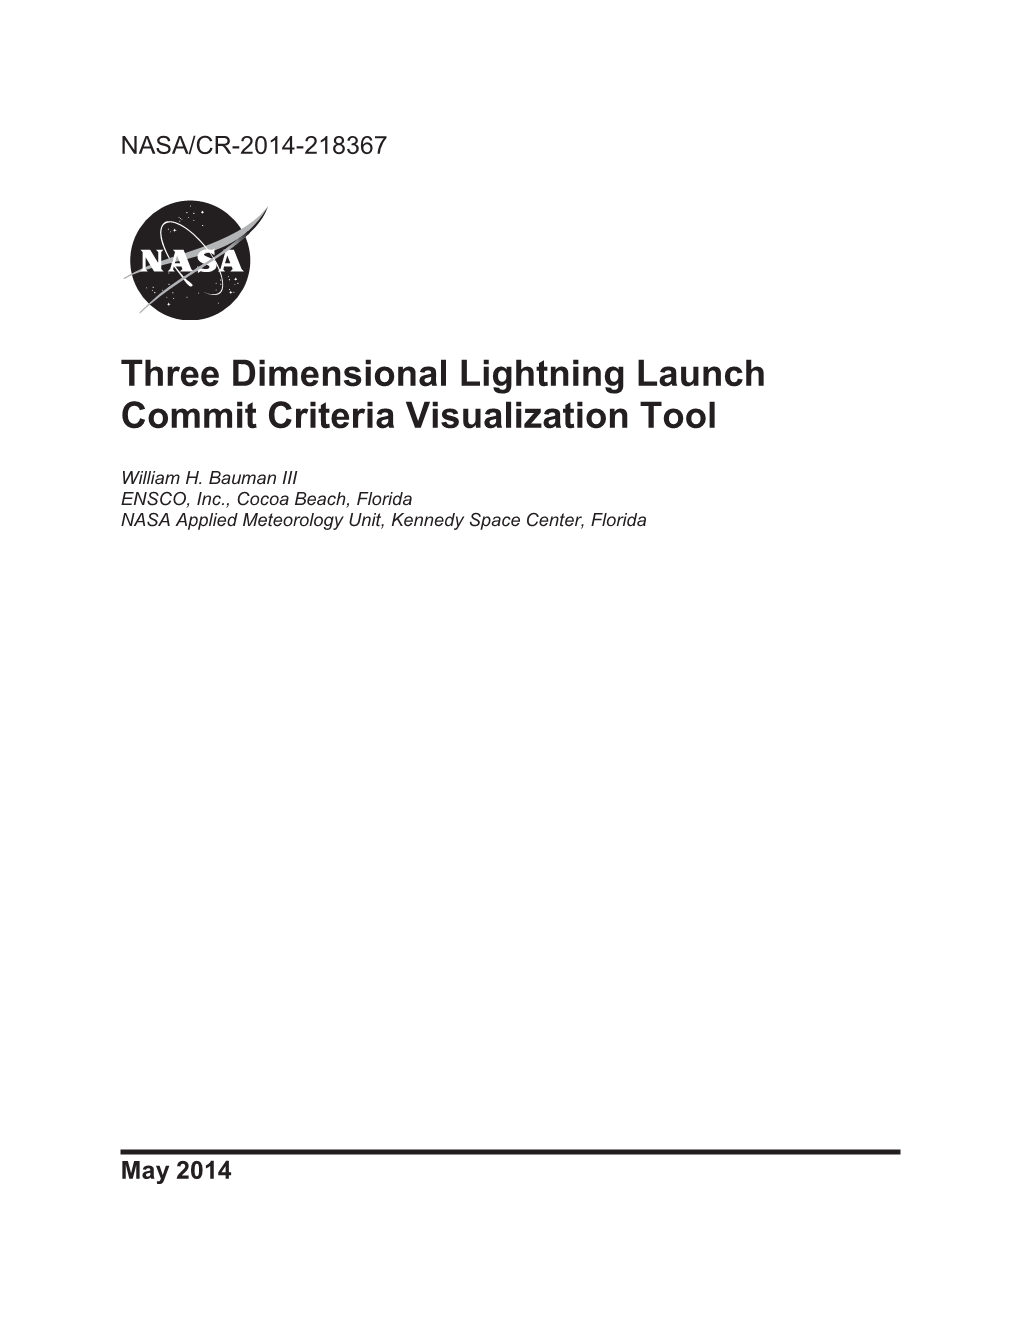 Three Dimensional Lightning Launch Commit Criteria Visualization Tool